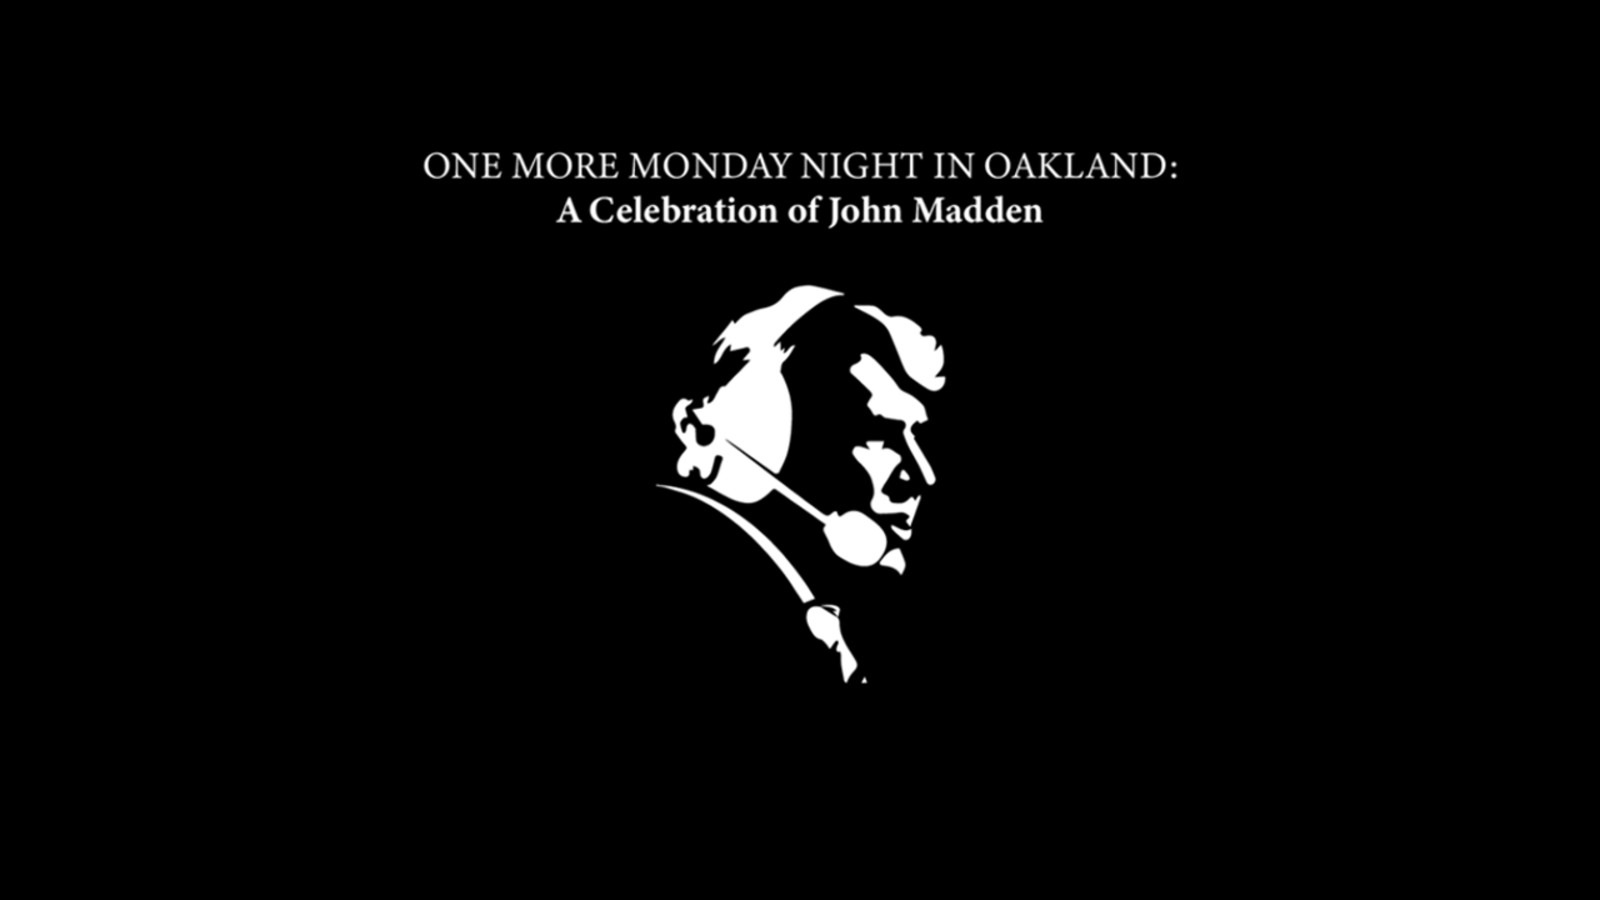 John Madden public memorial to be held at Oakland Coliseum